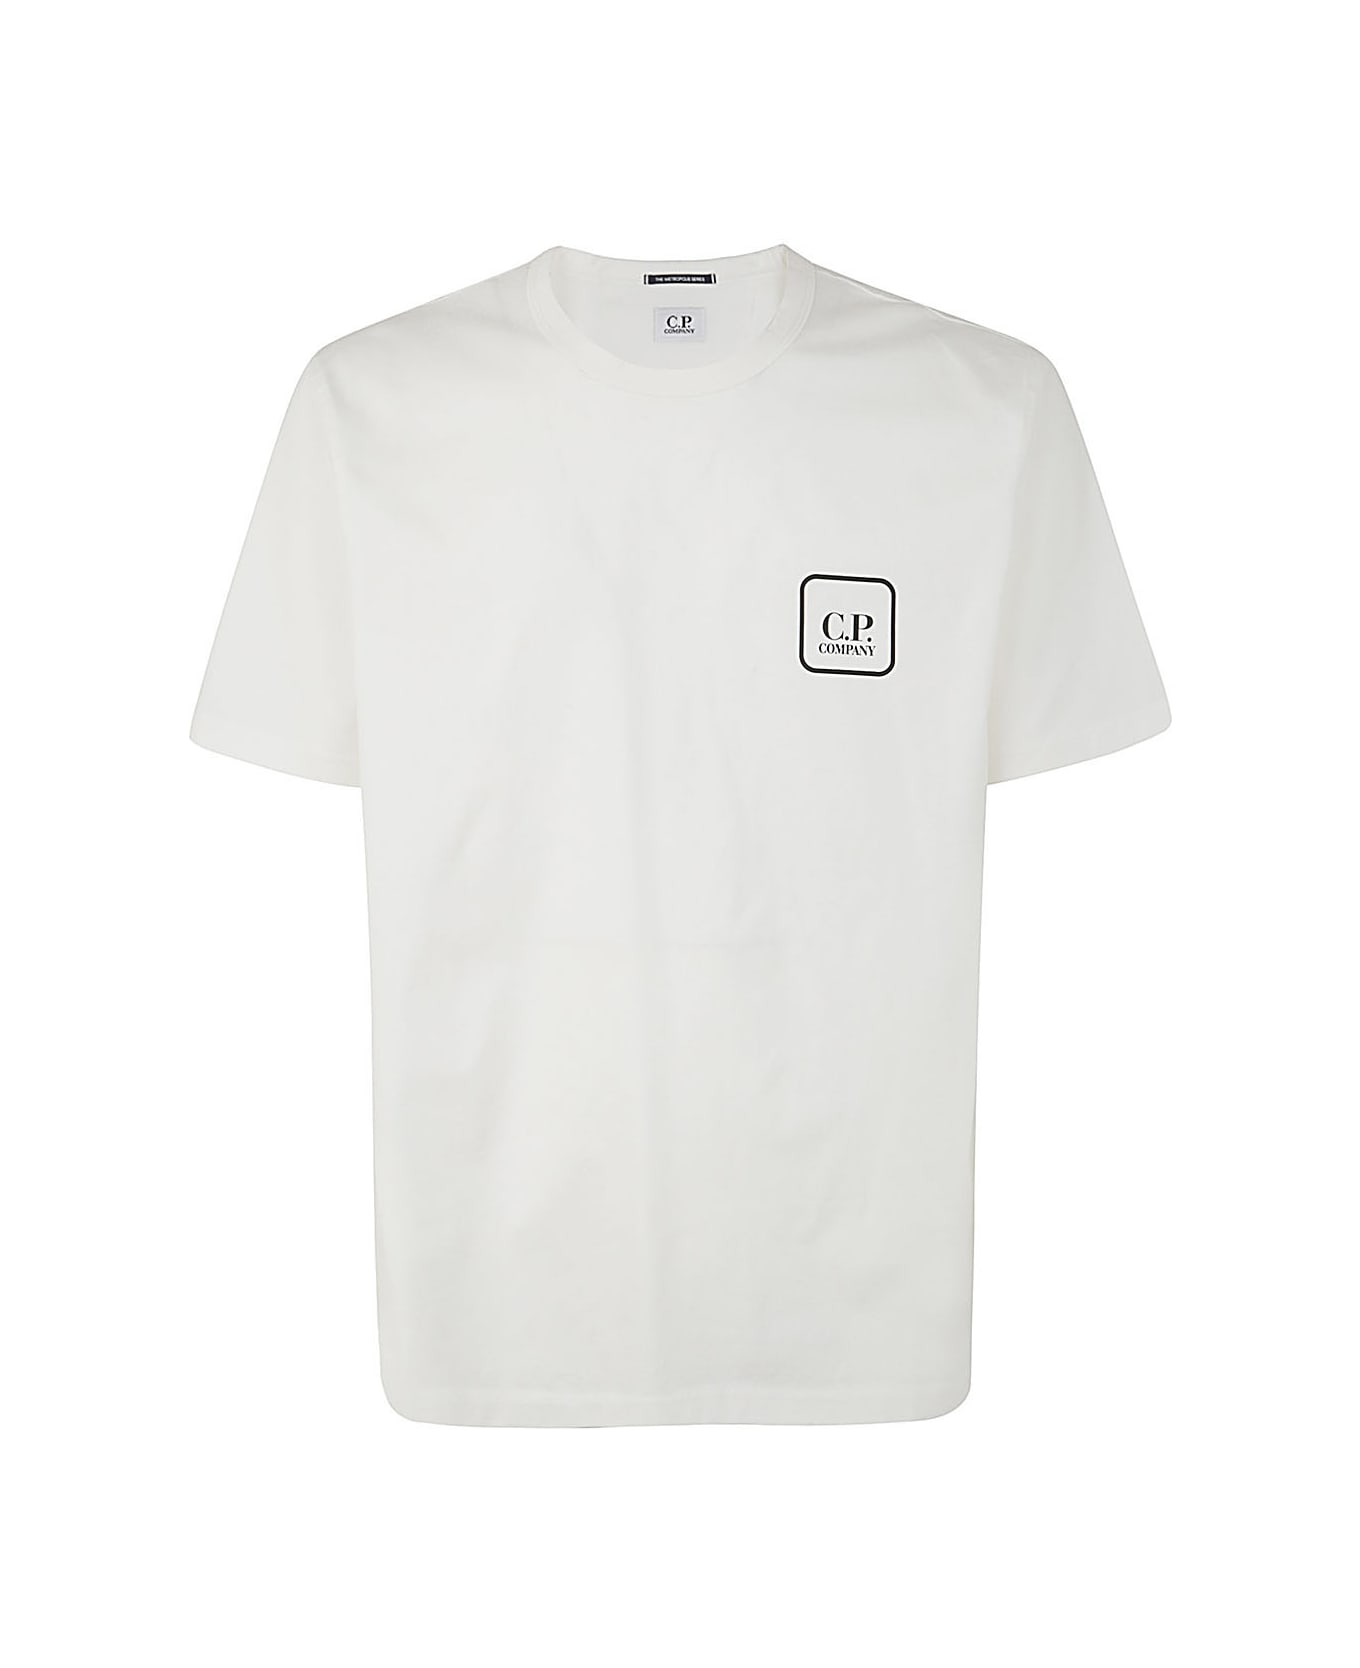 C.P. Company Metropolis Series Mercerized Jersey Logo Graphic T-shirt - White